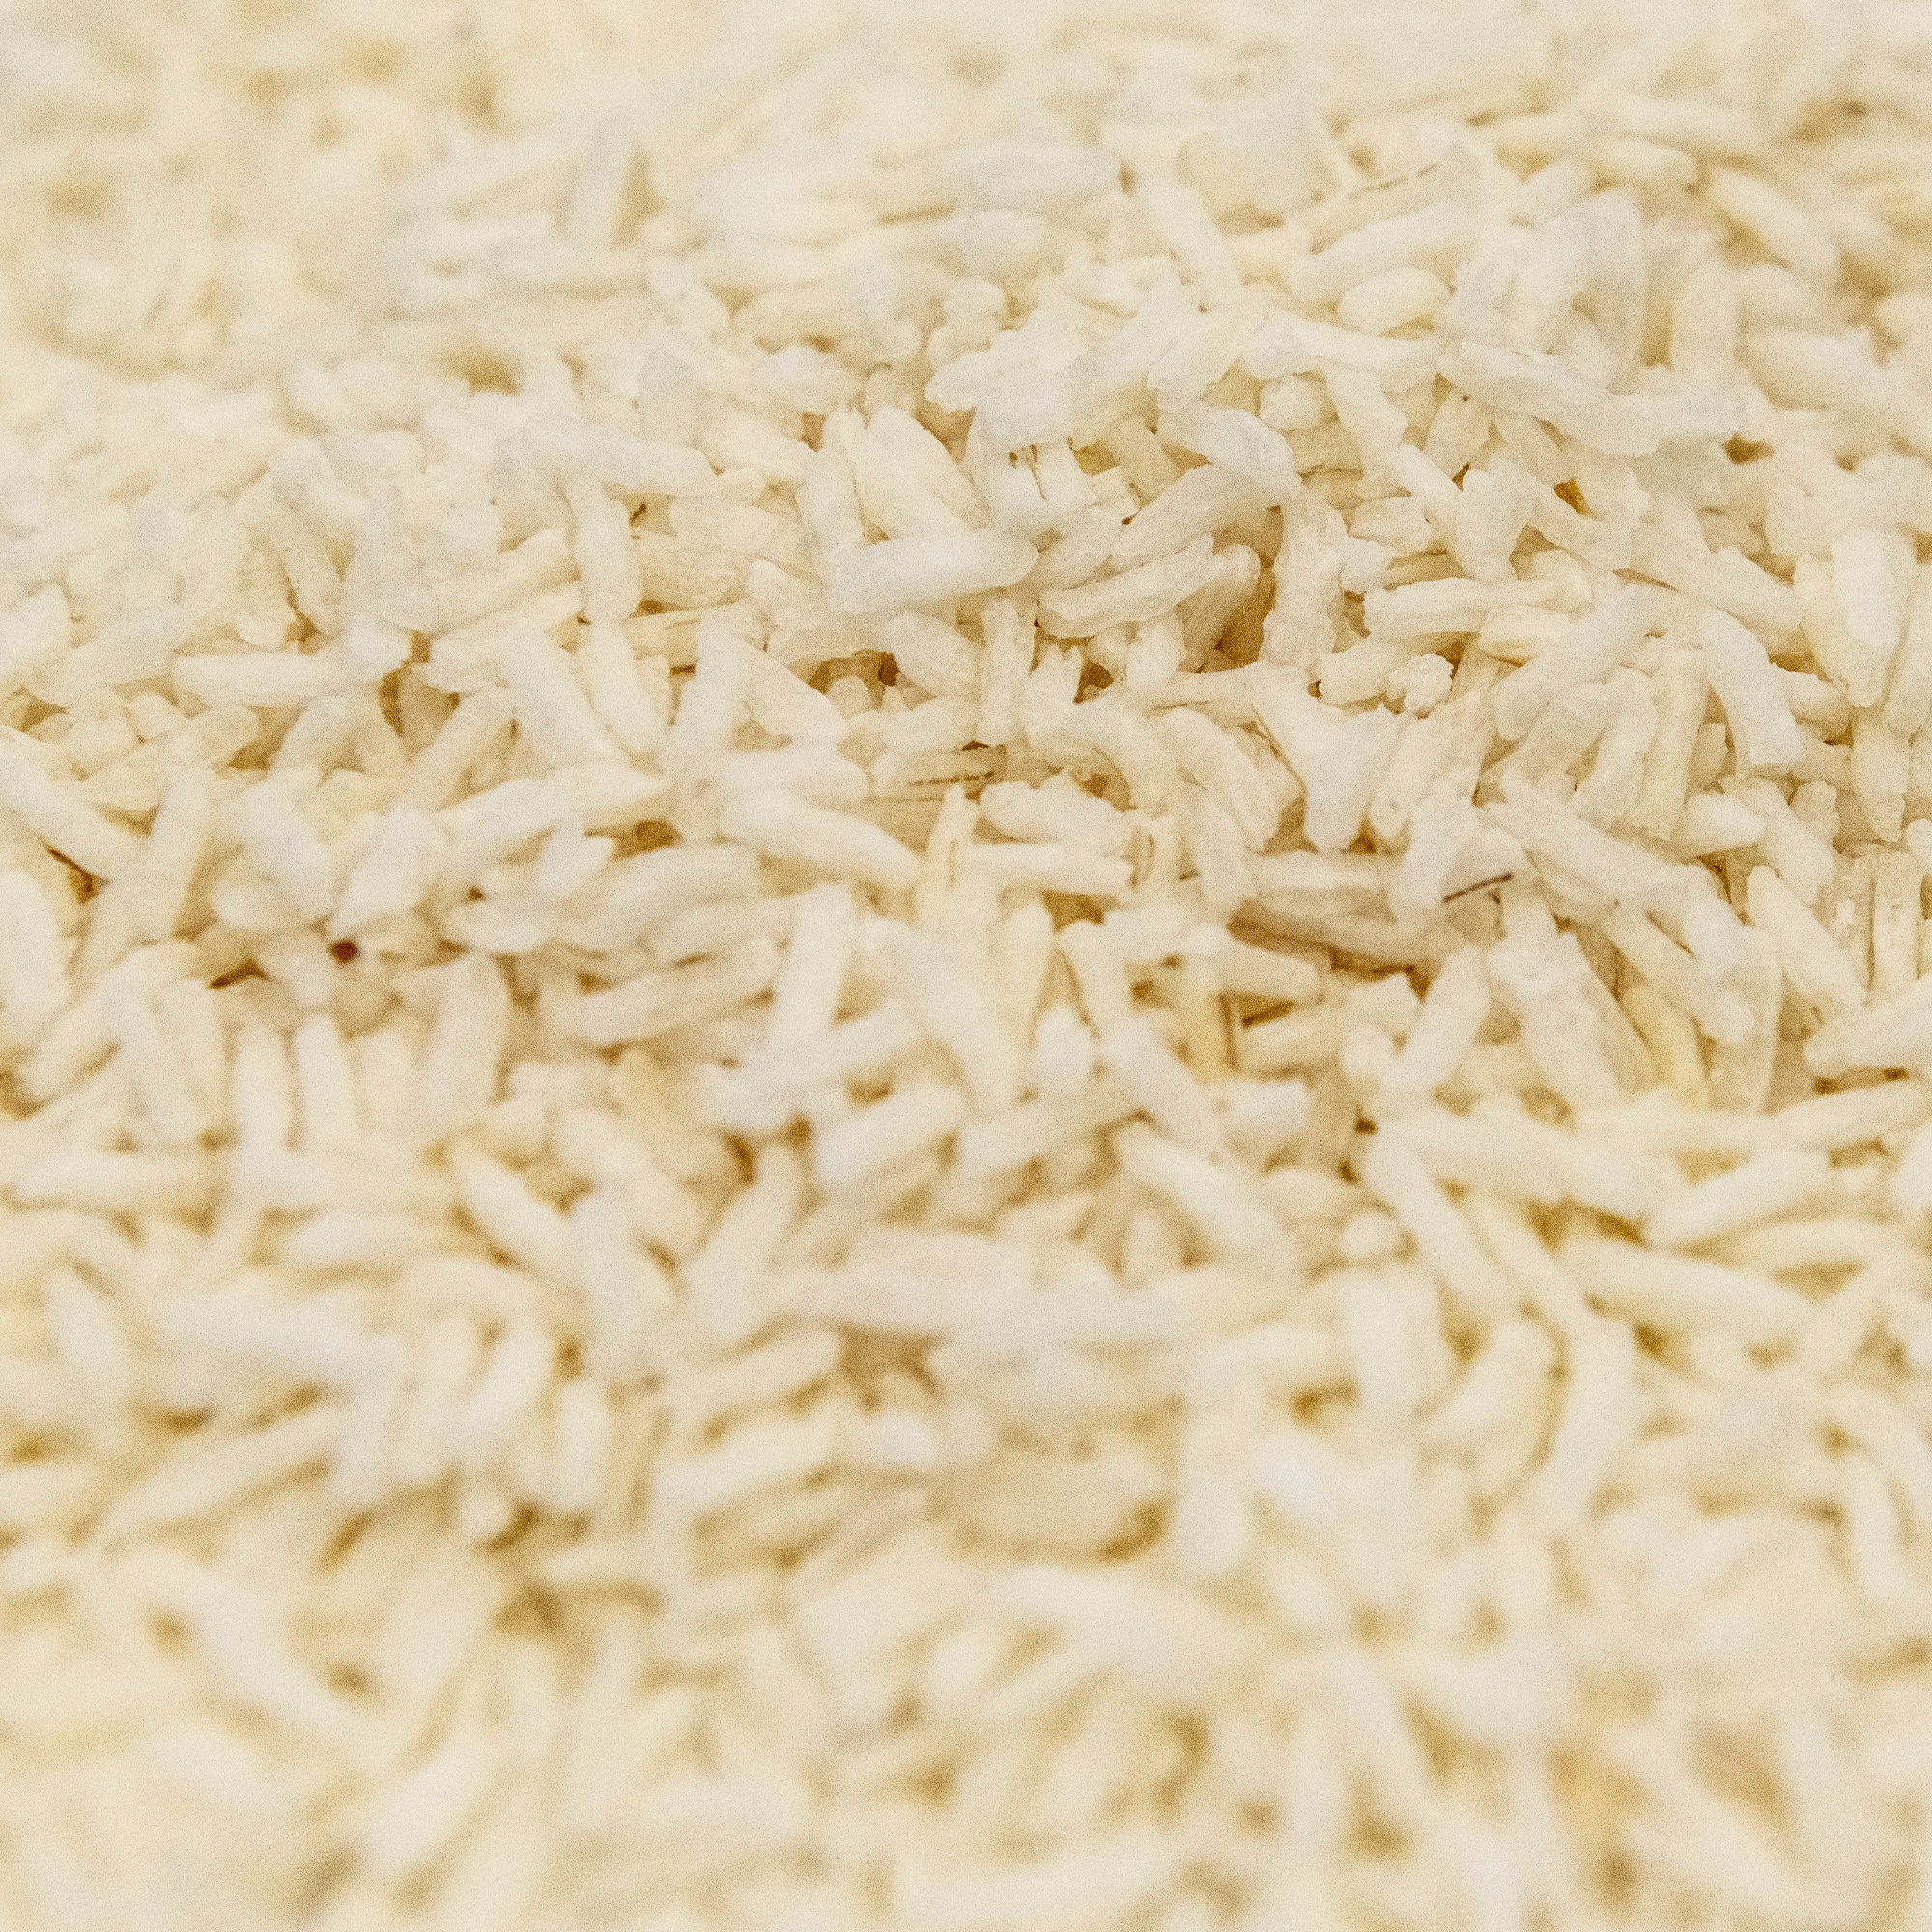 Picture of instant jasmine rice grains